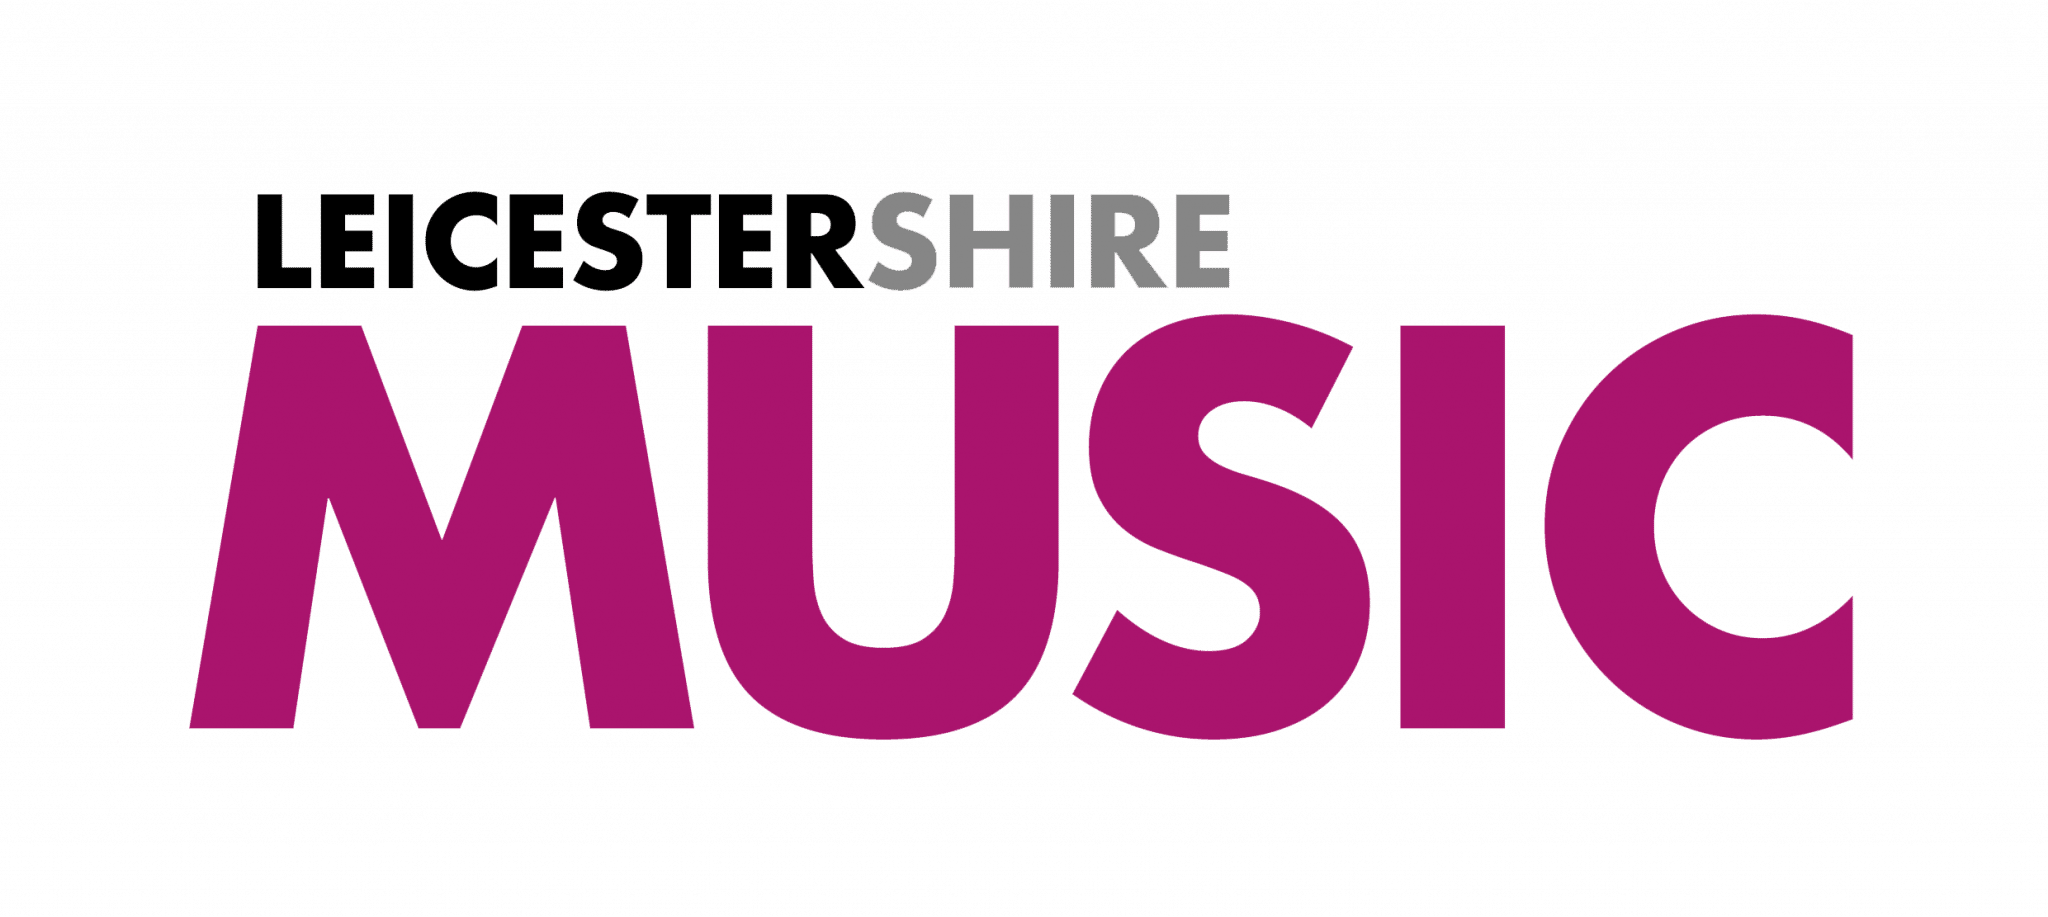 leicestershire music hub logo